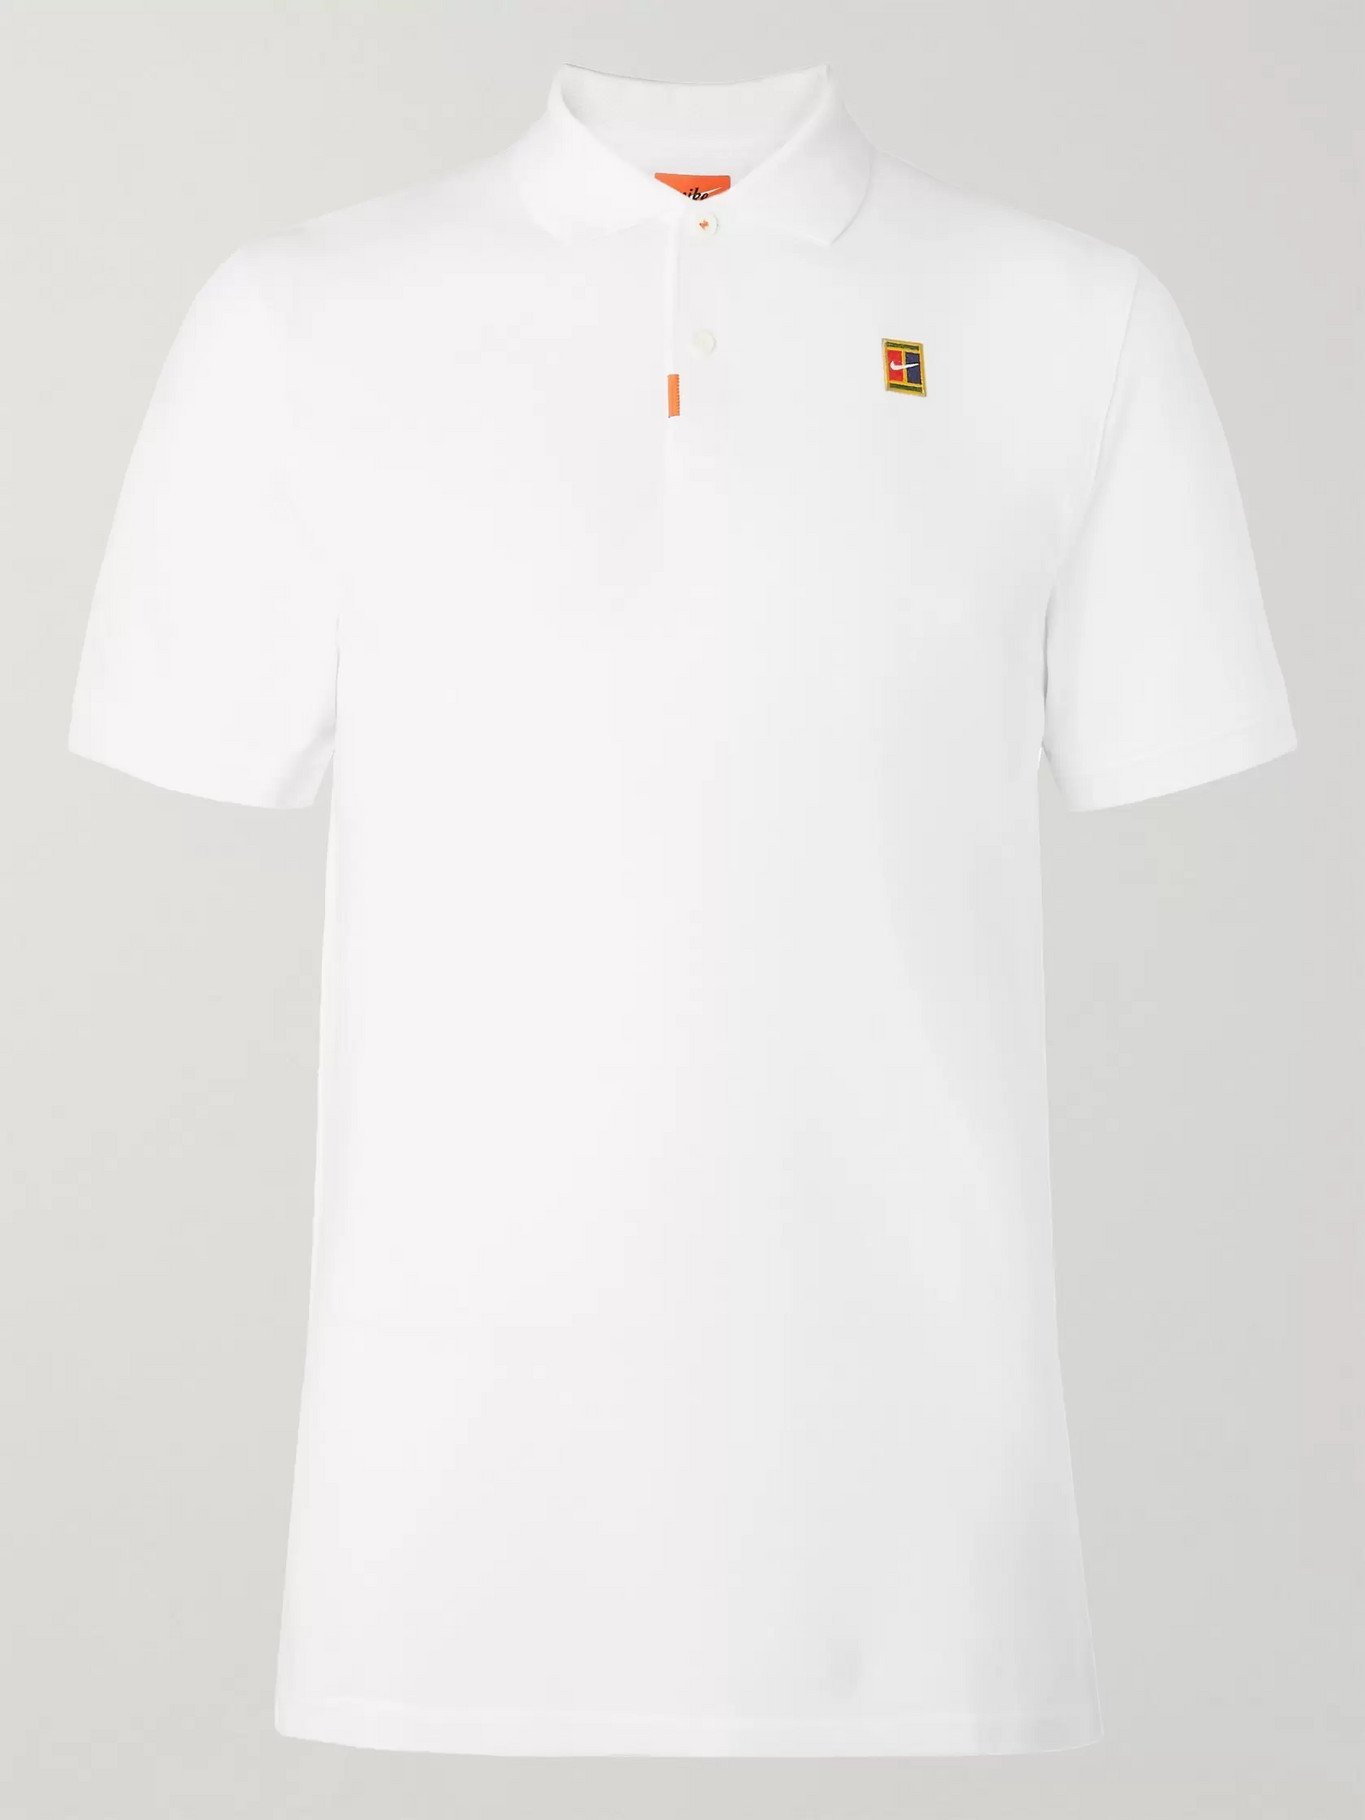 Tennis Polo Shirt - White Nike Tennis